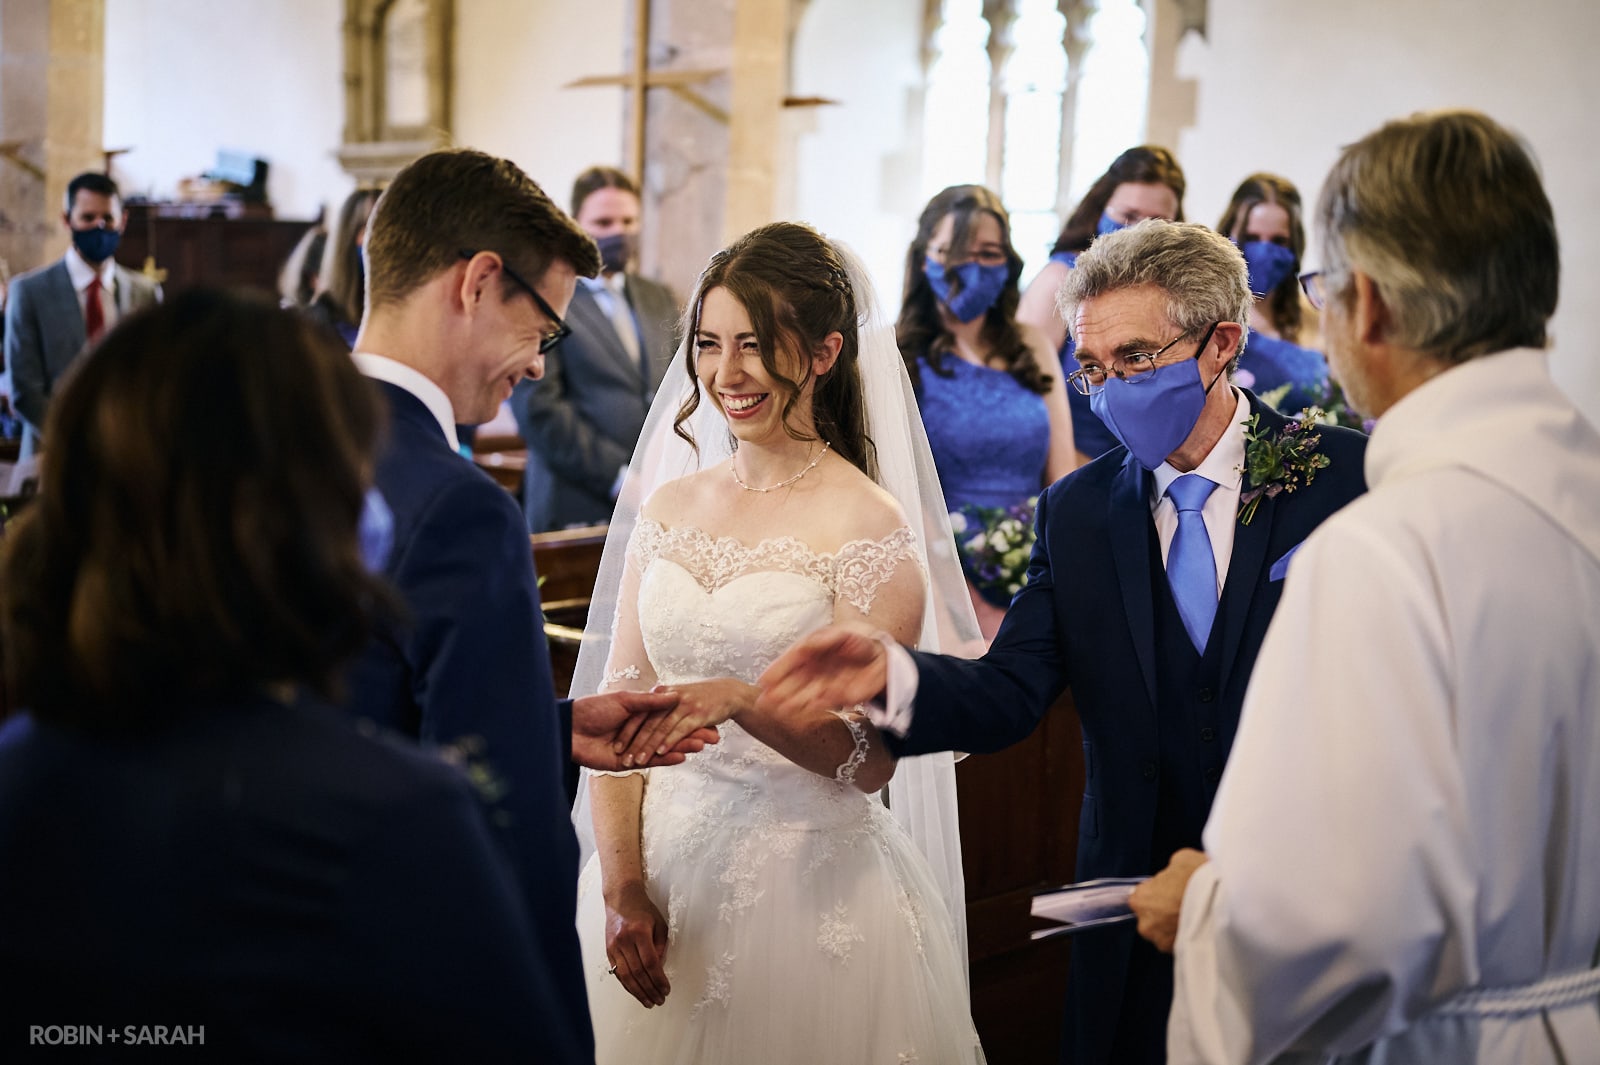 Wedding ceremony at St Faiths Kilsby